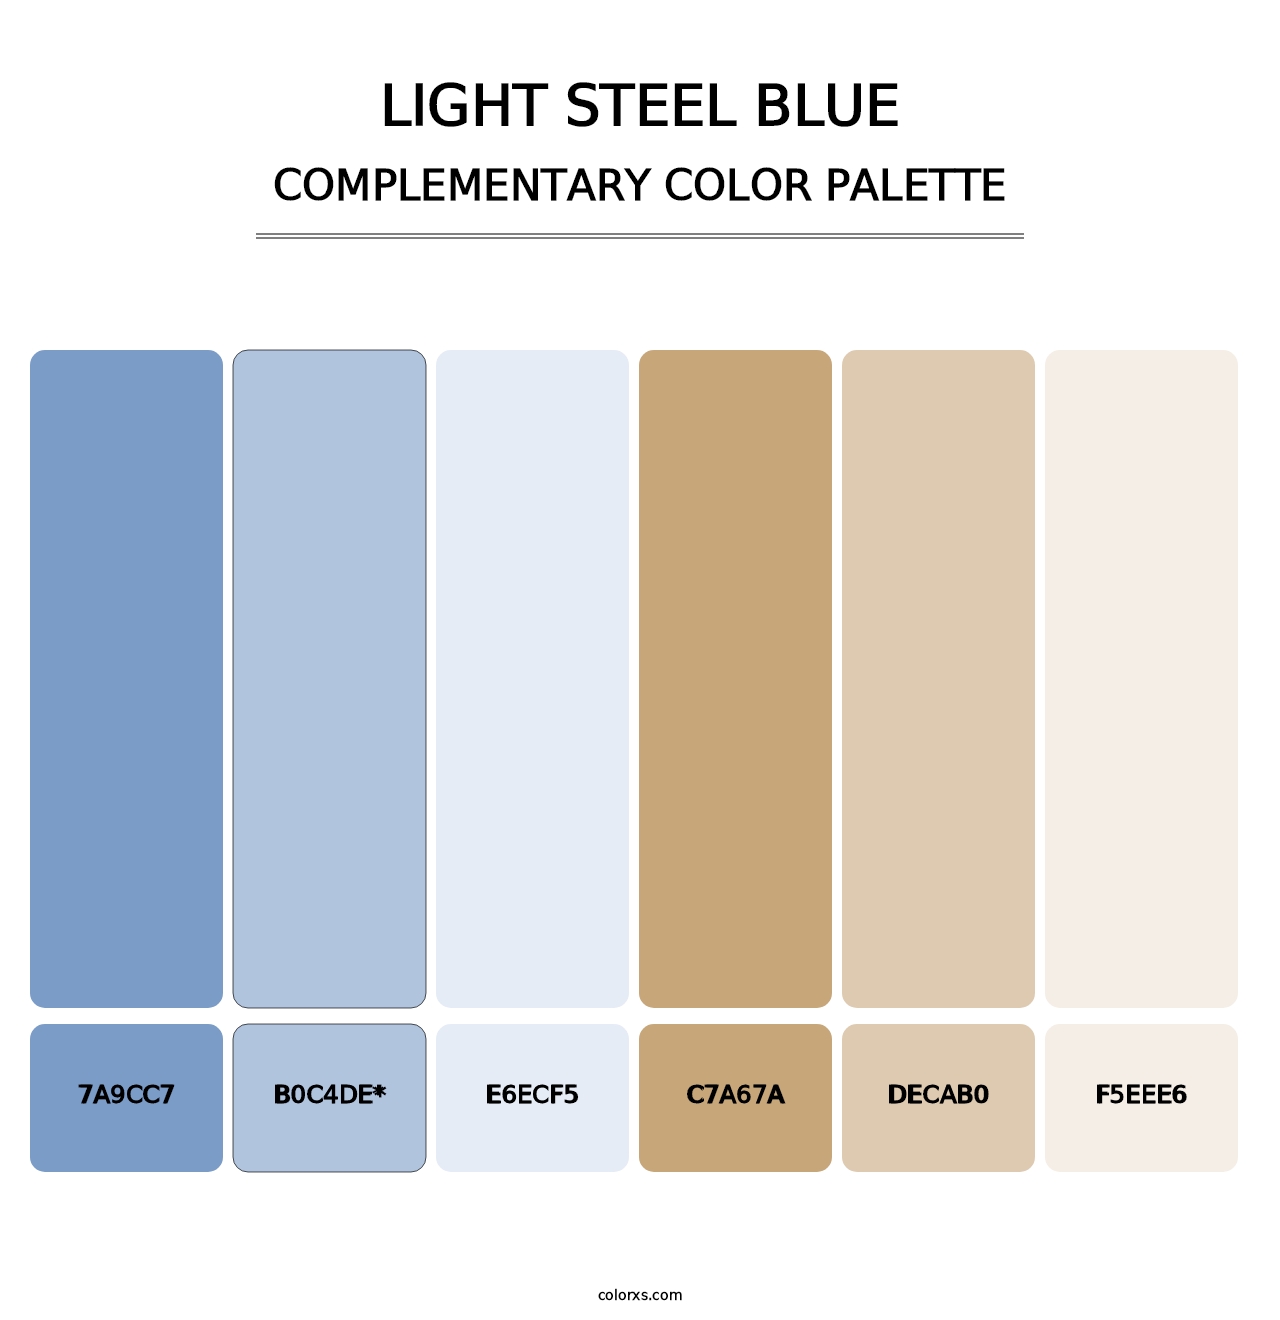 Light Steel Blue - Complementary Color Palette